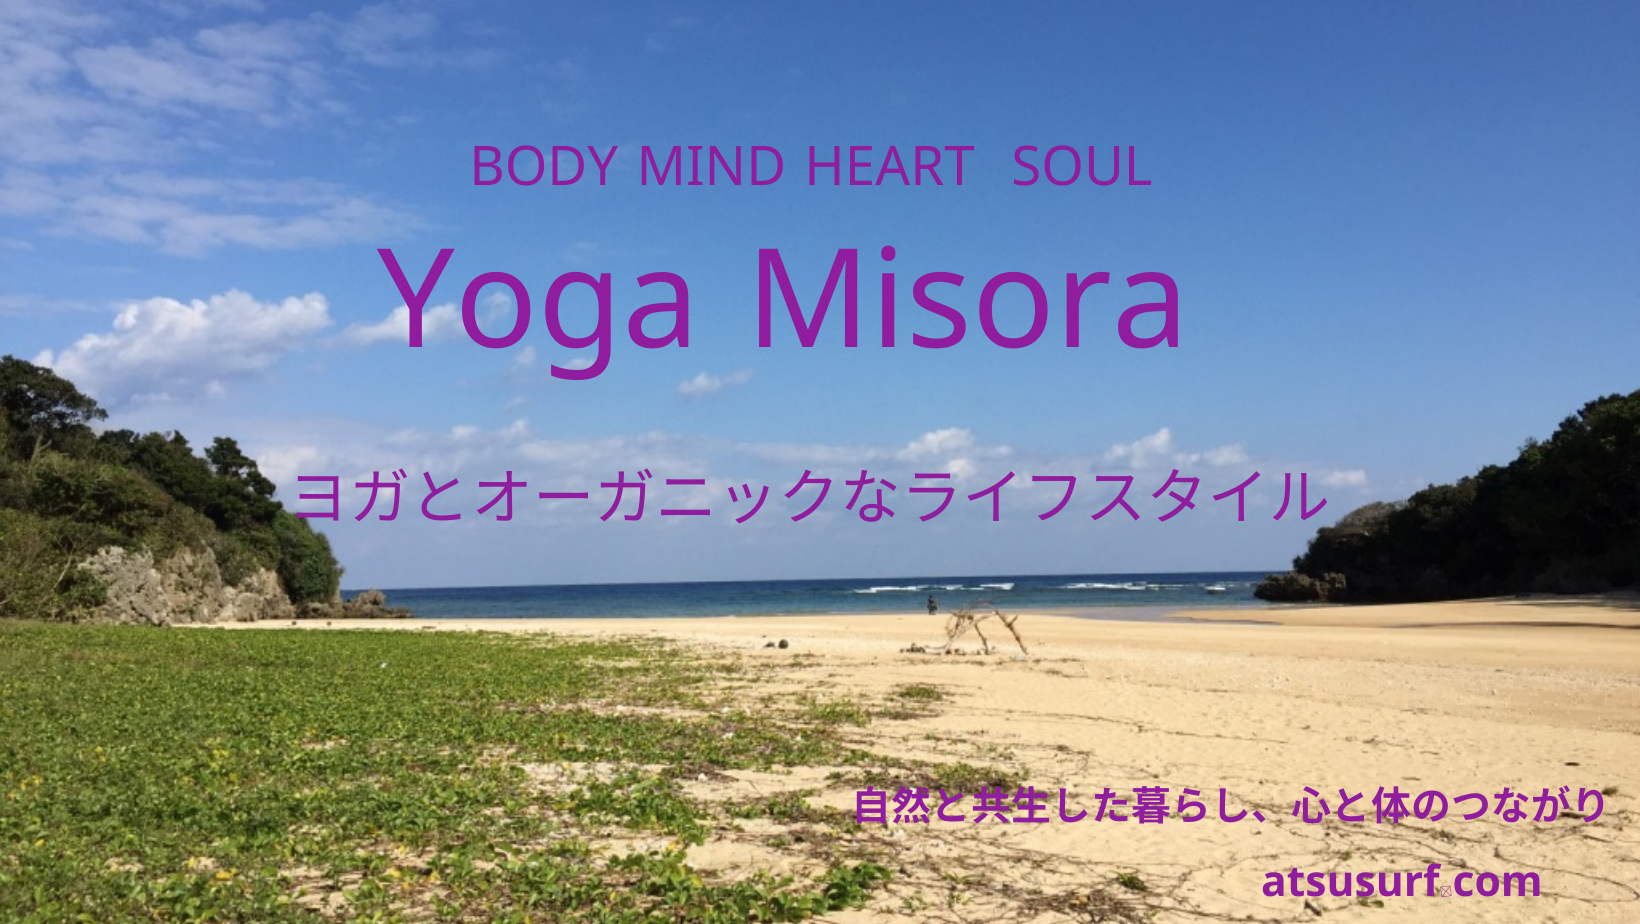 Yoga Misora